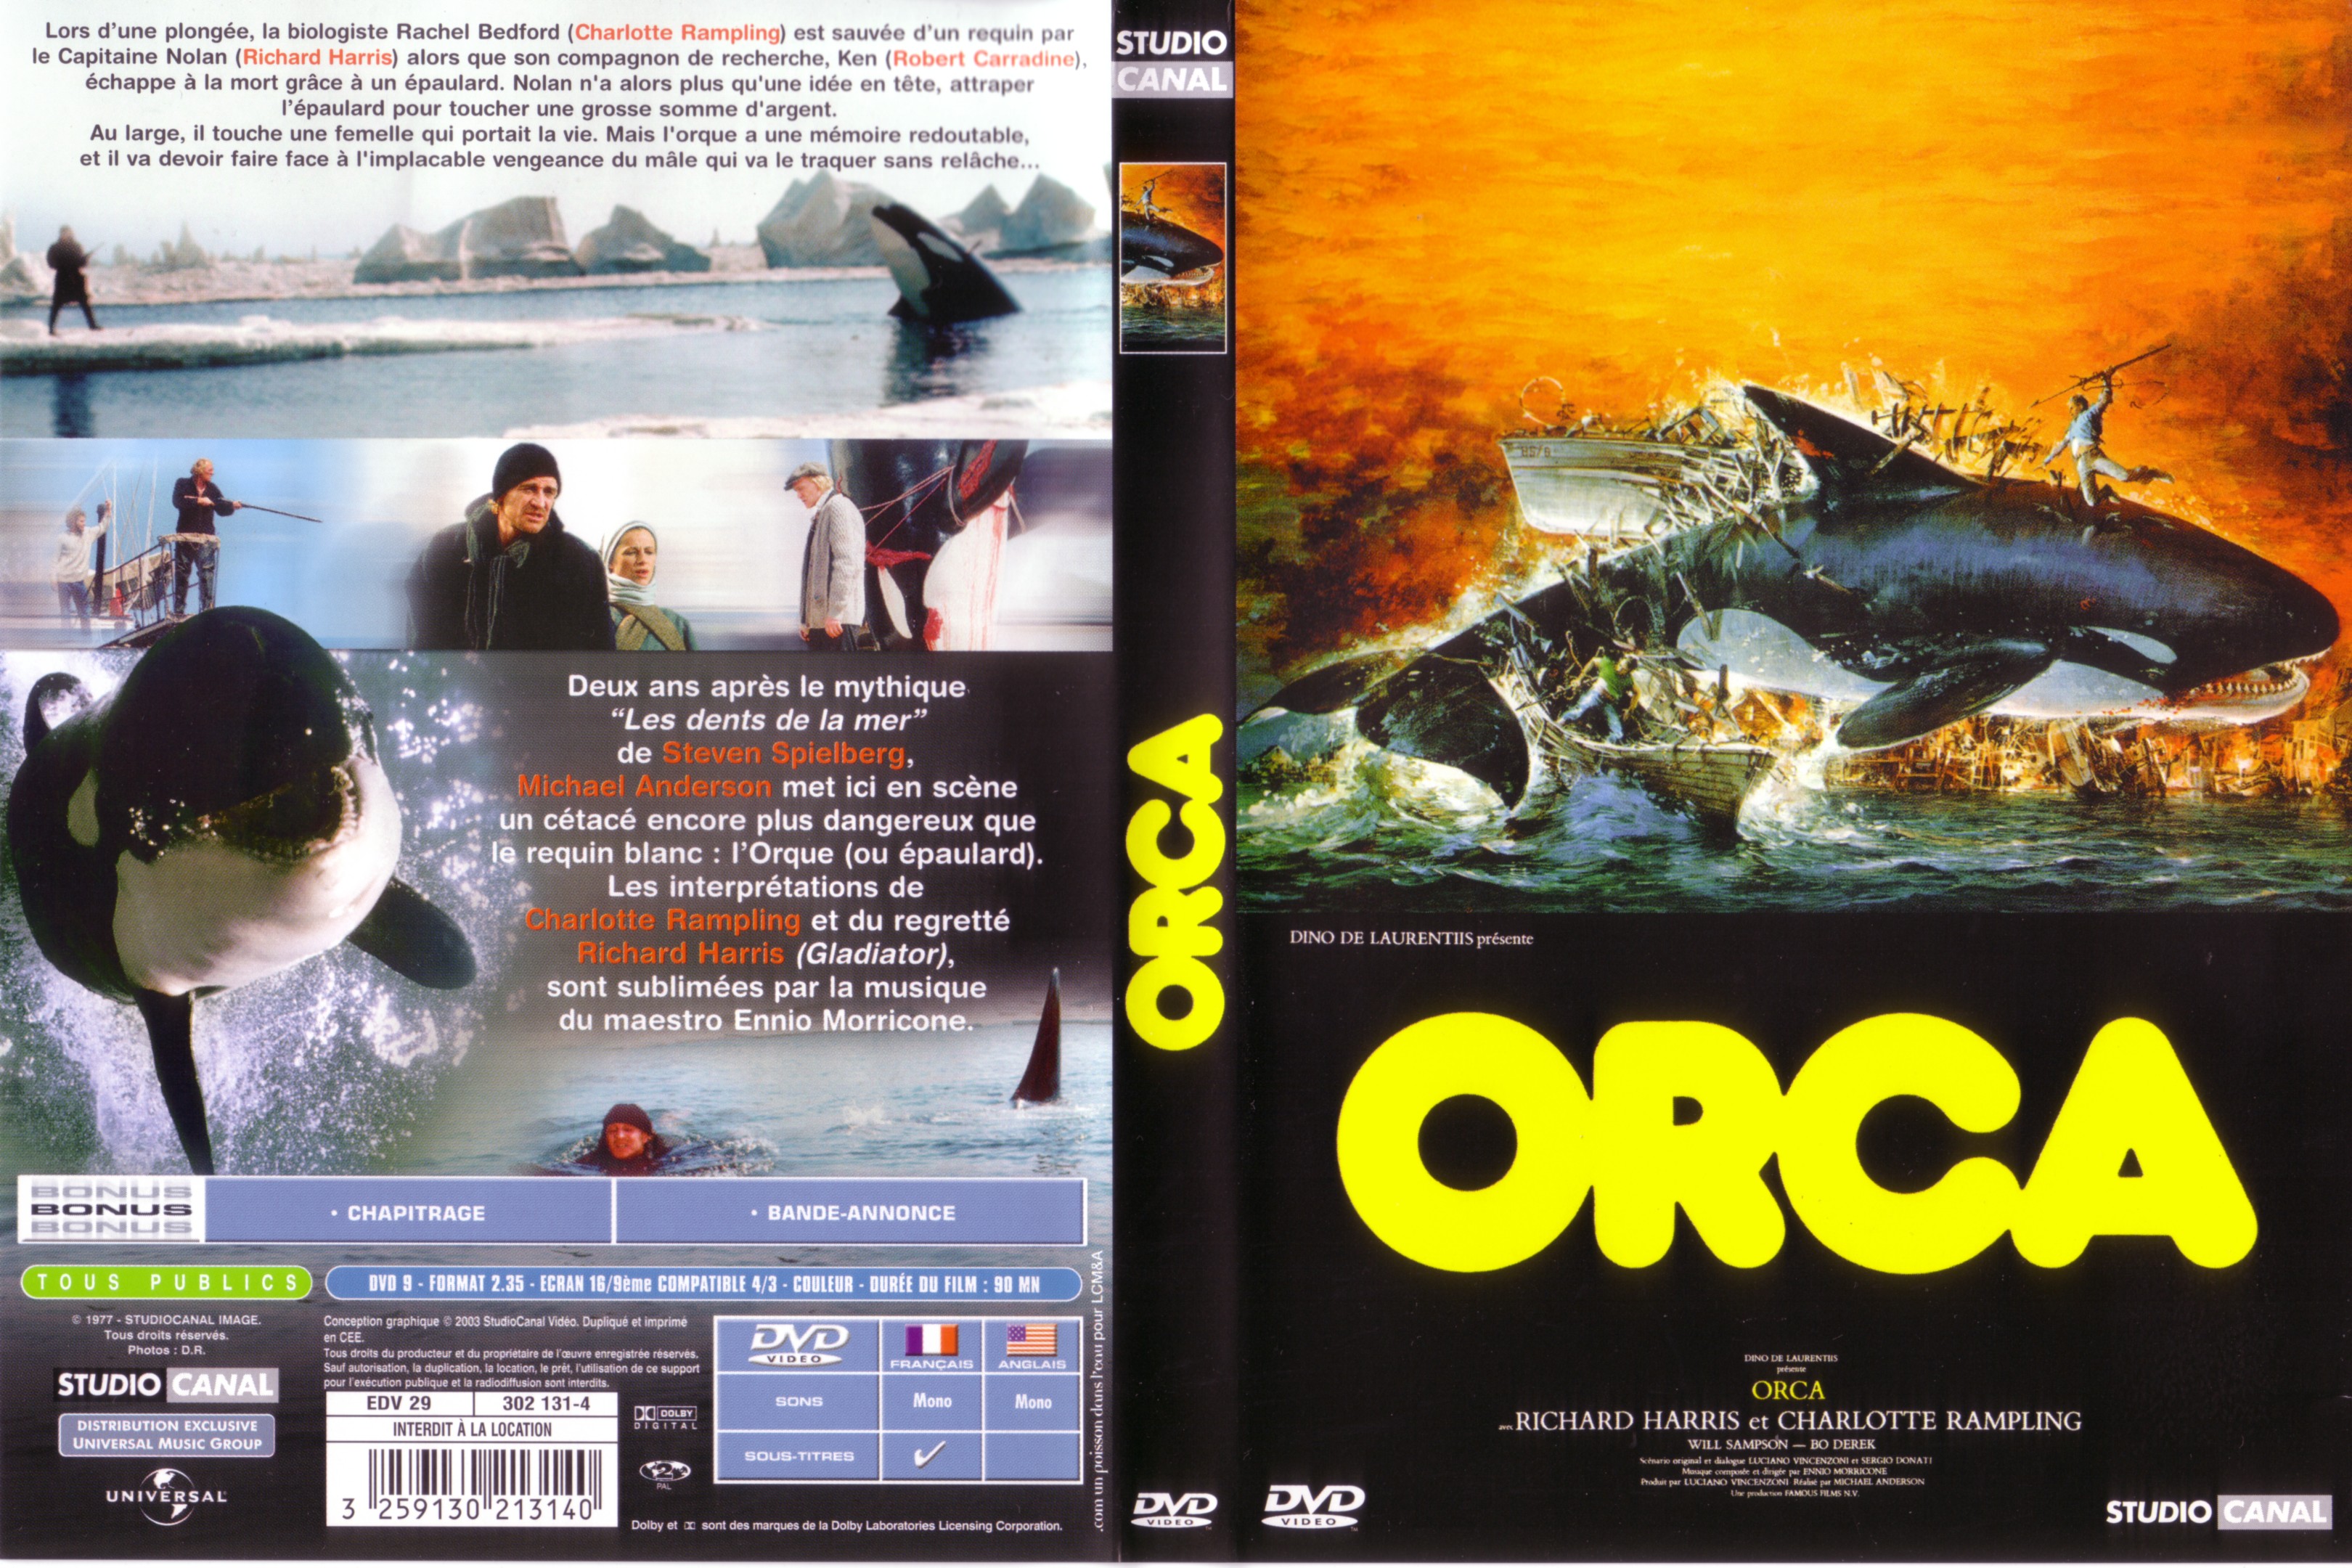 Jaquette DVD Orca